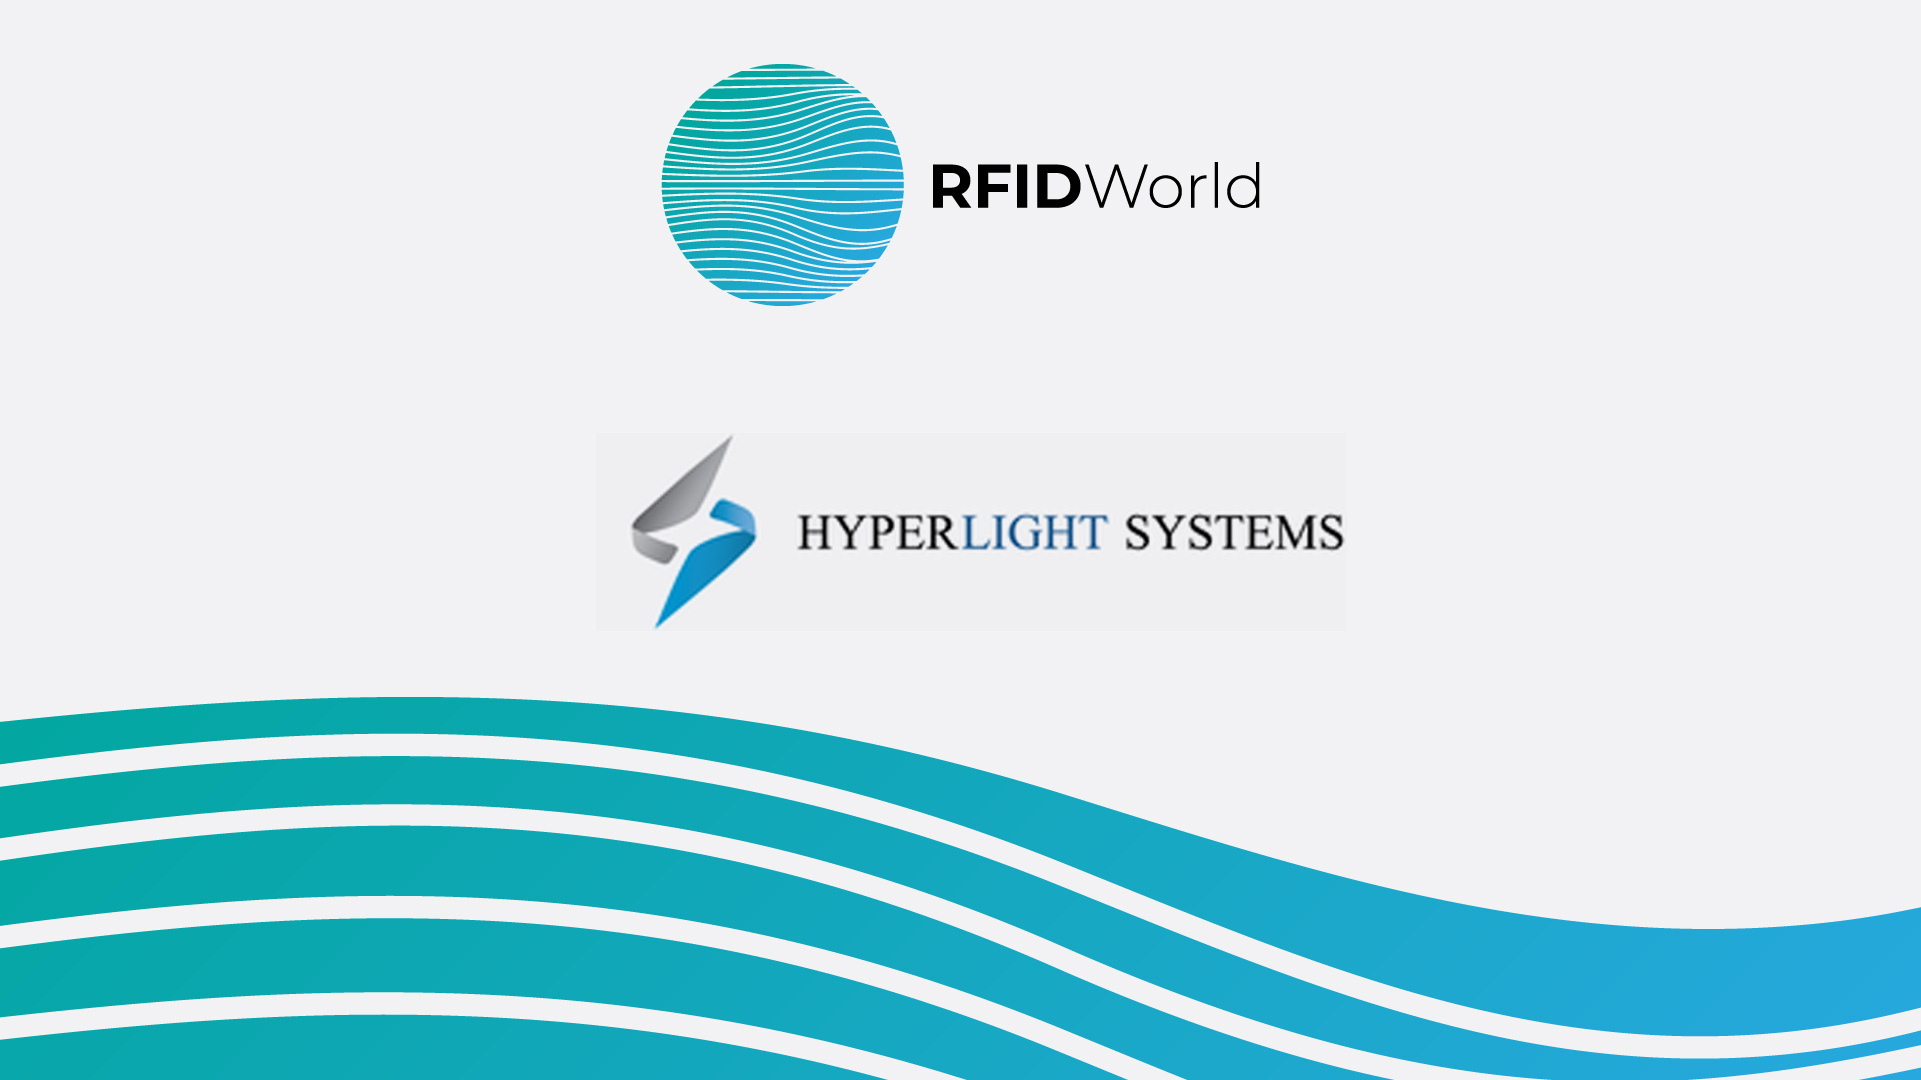 RFID World Hyperlight Systems News